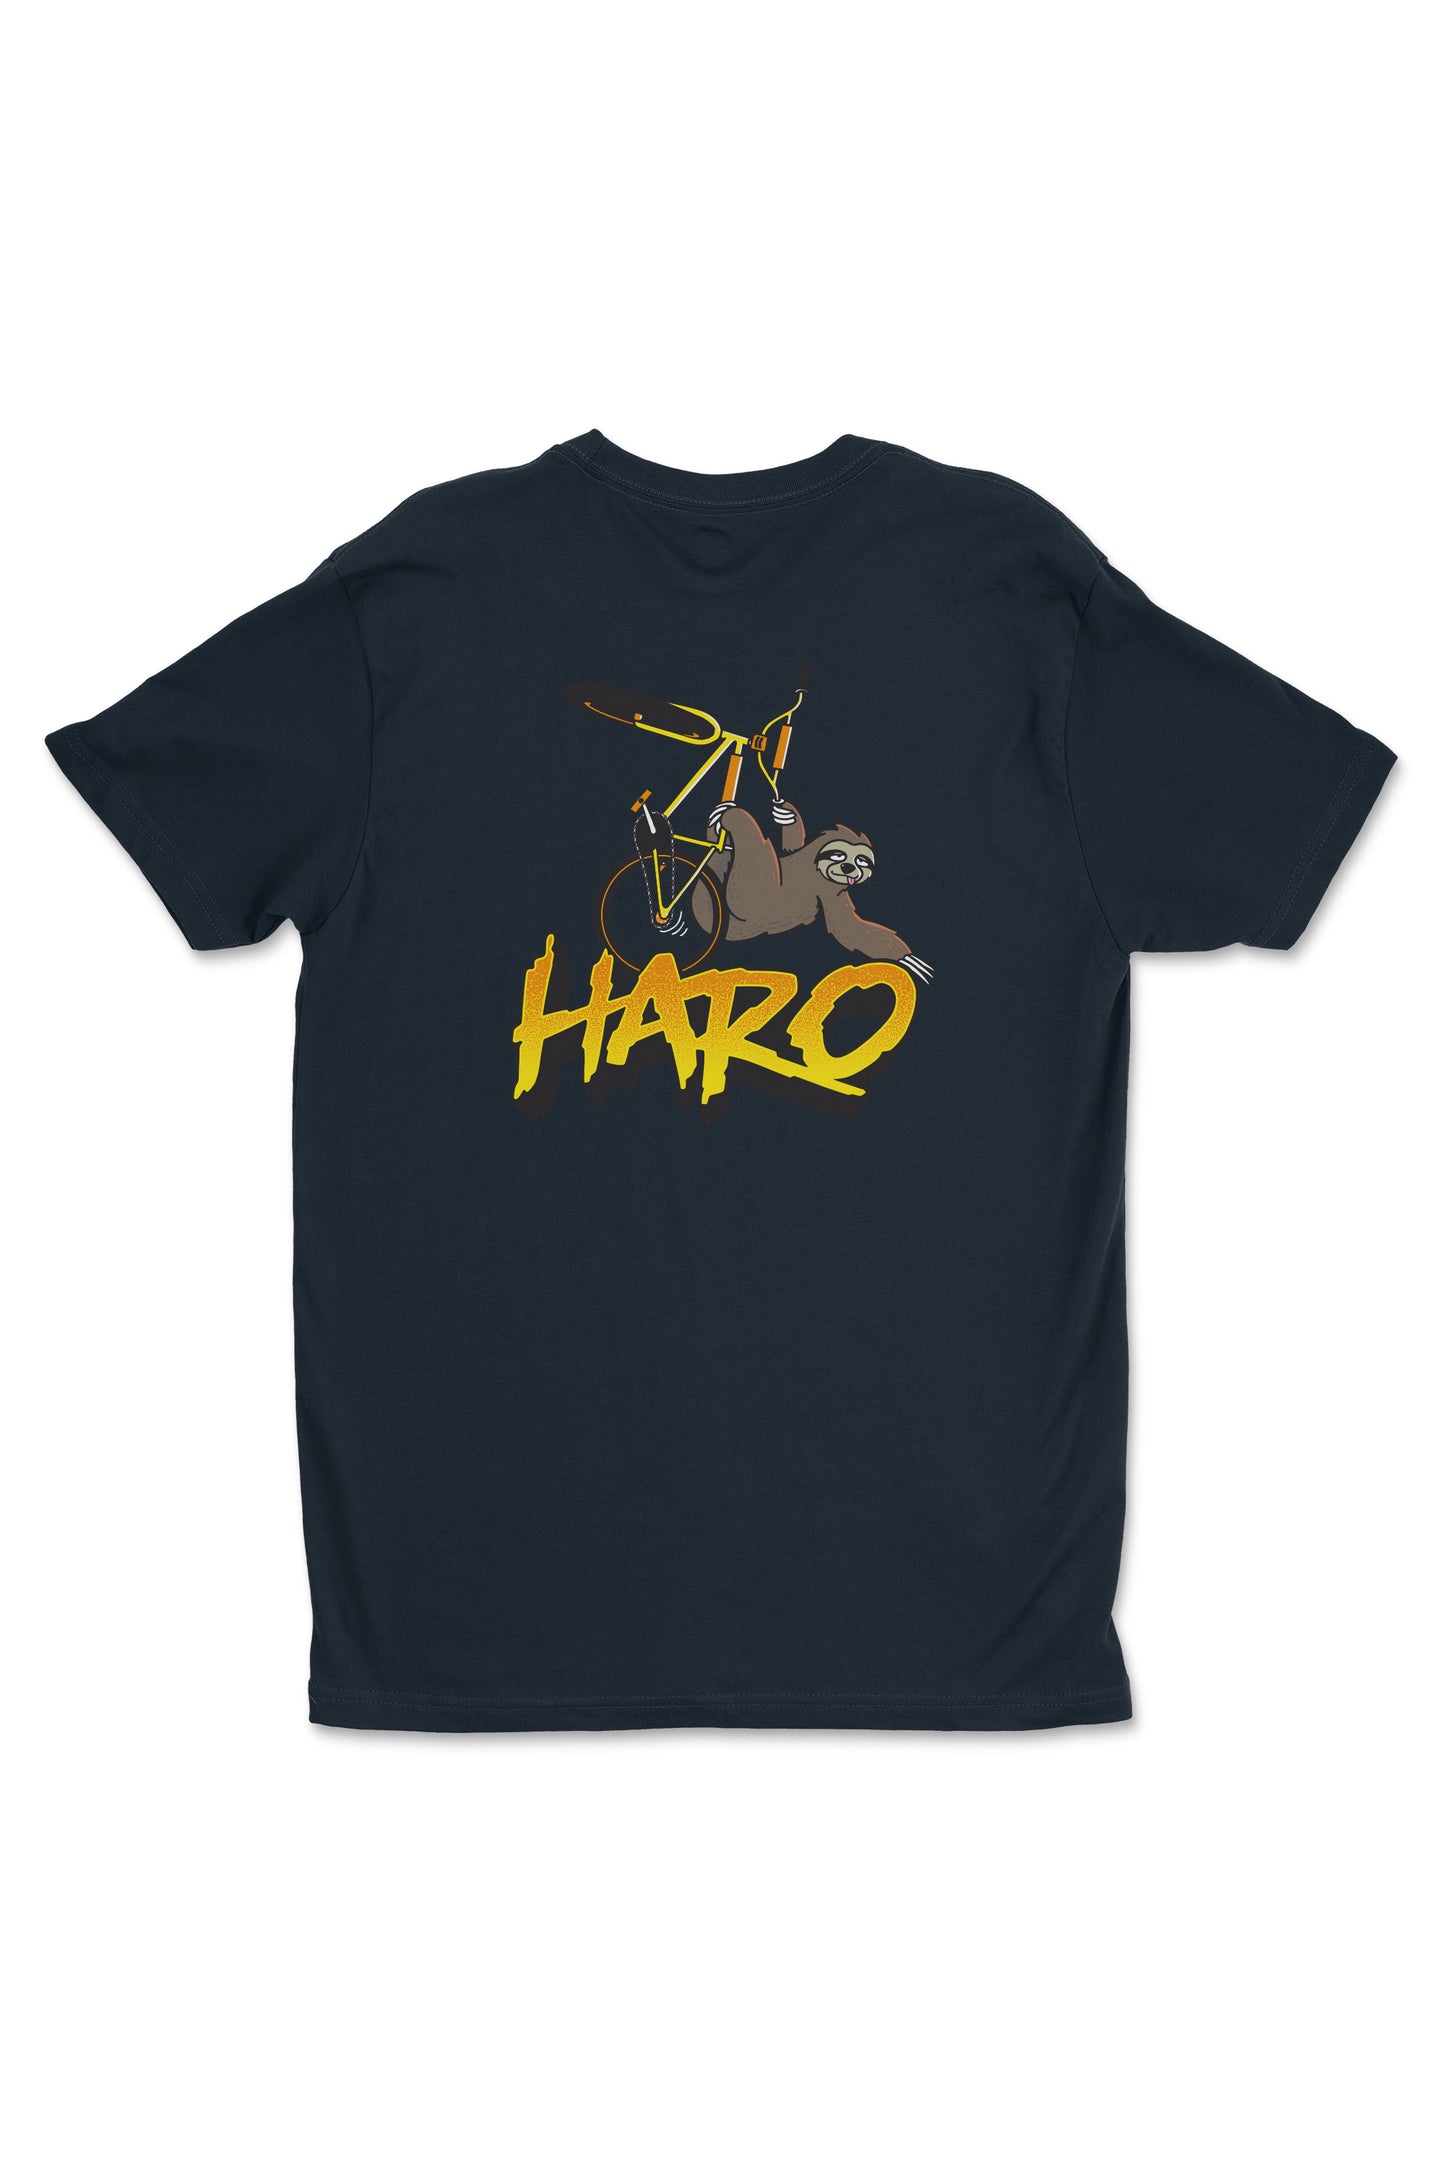 Haro Sloth Shirt